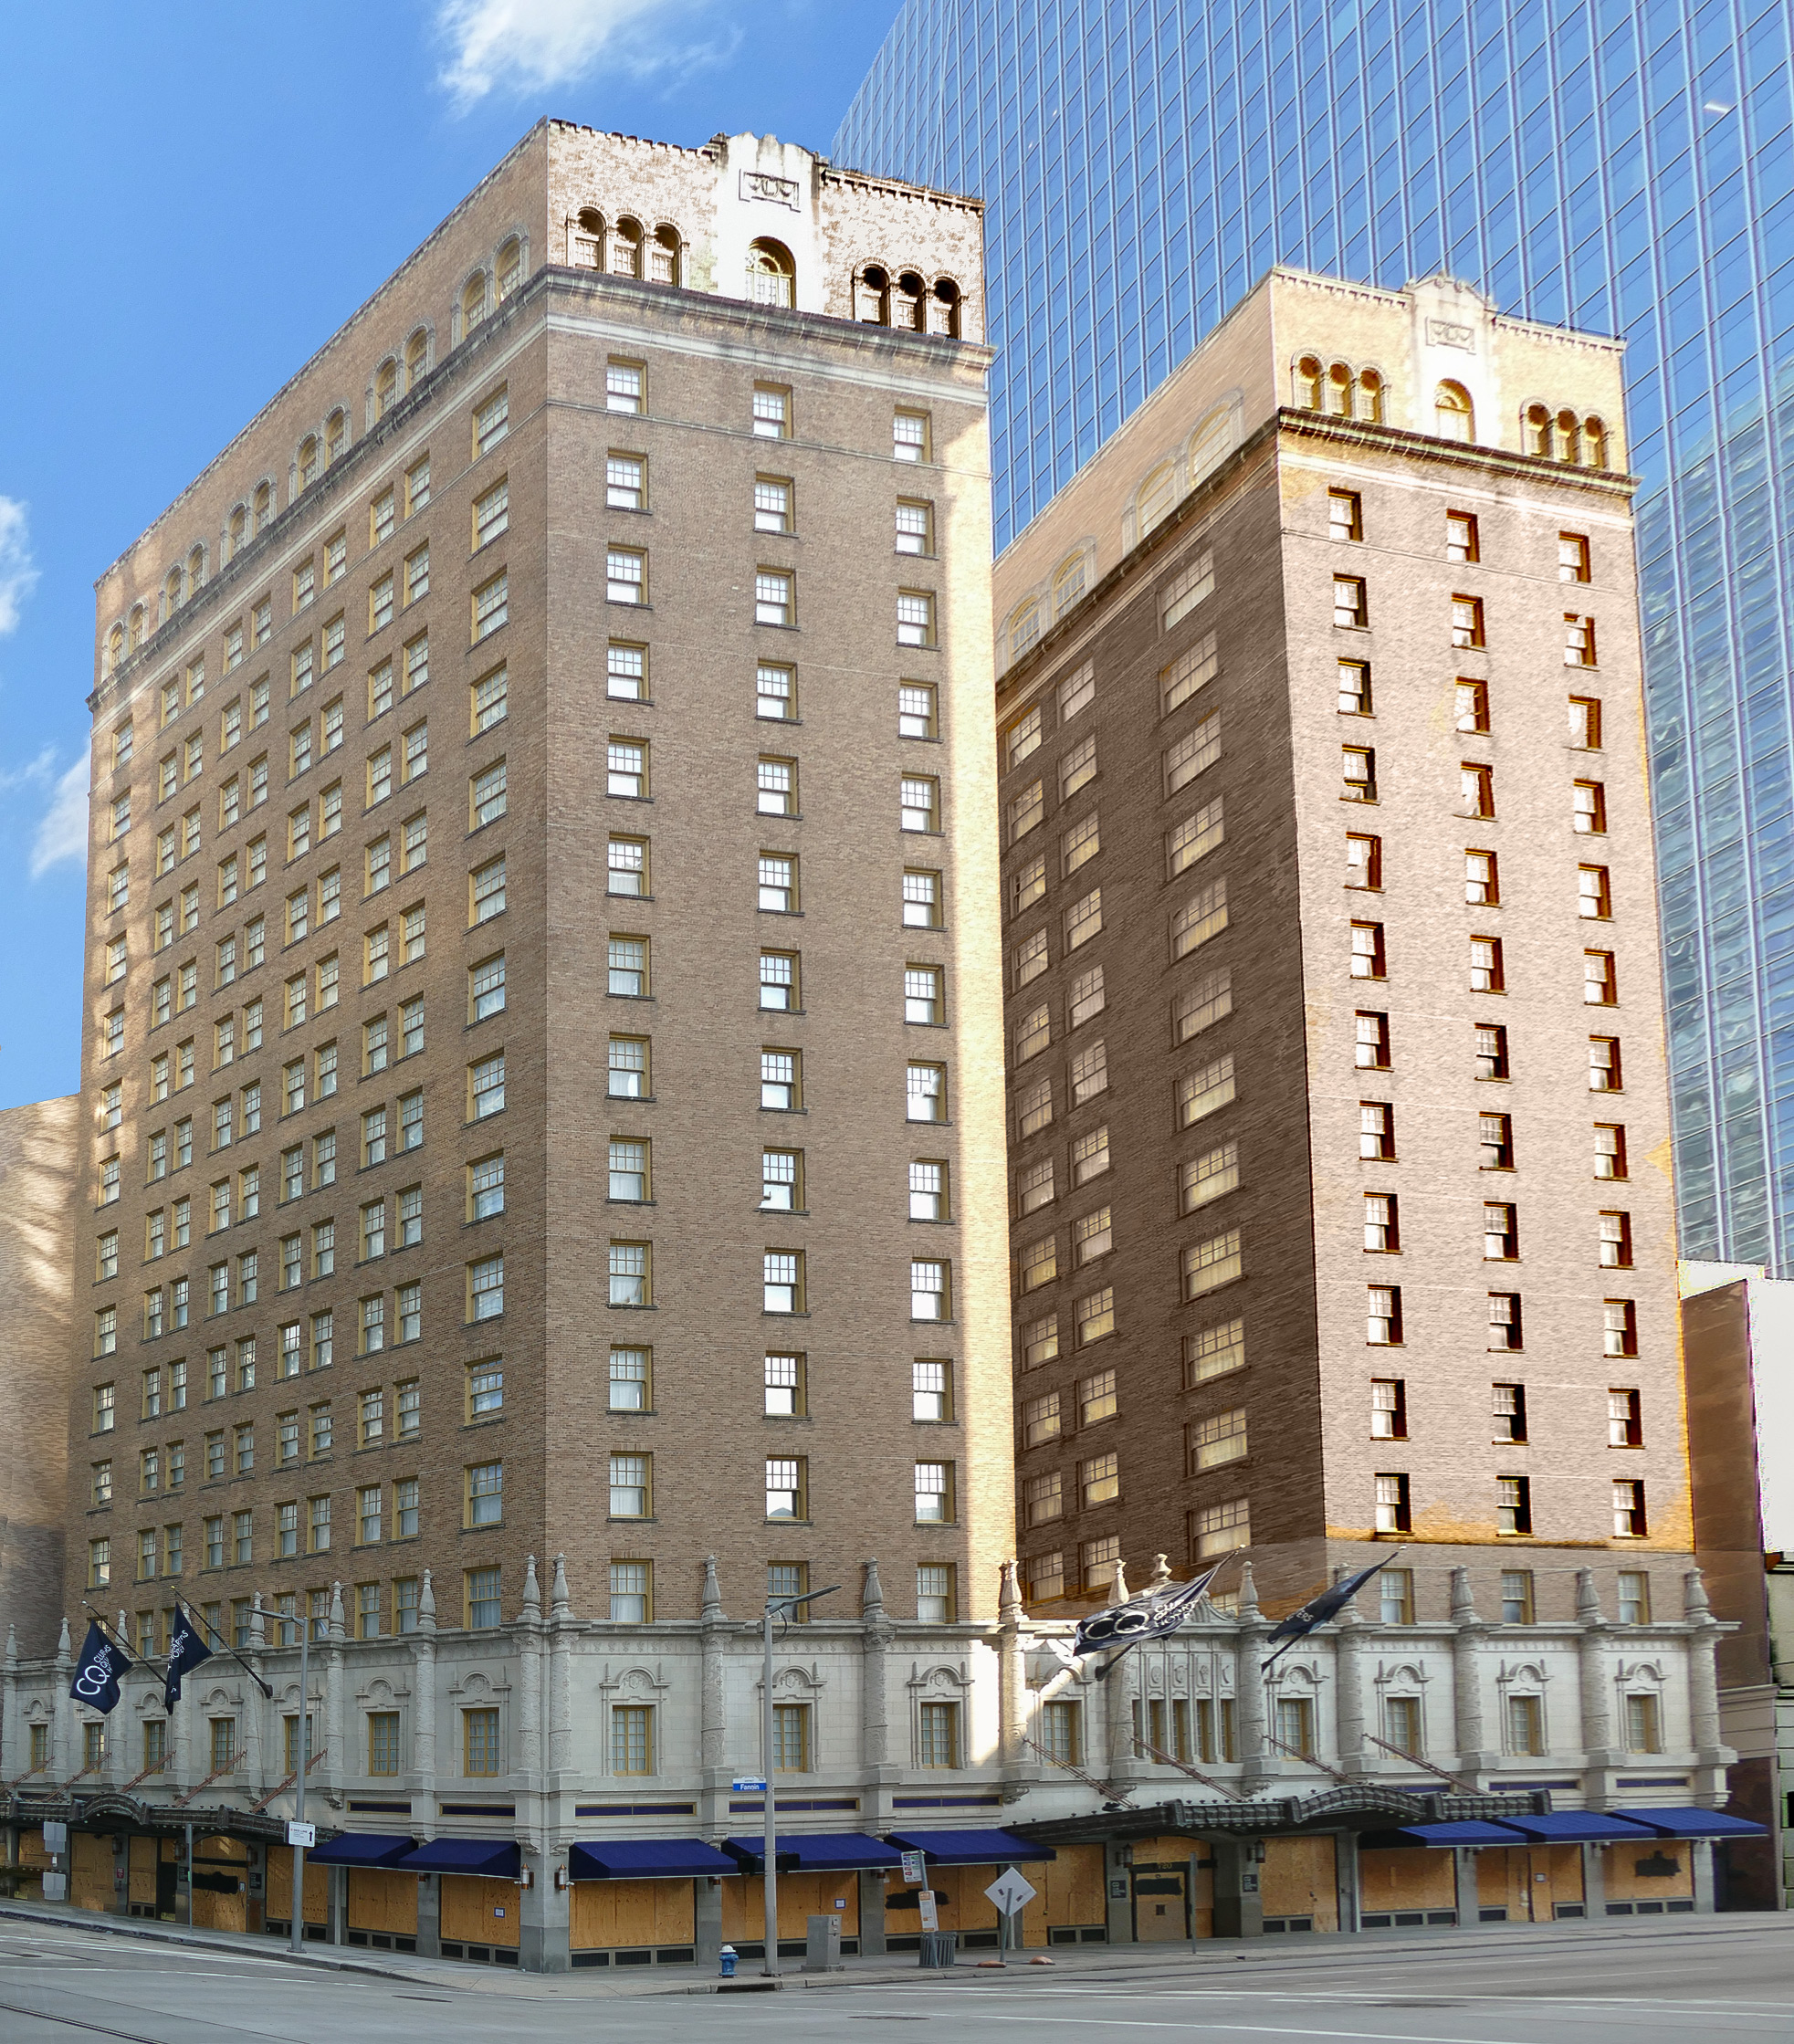 Club Quarters Hotel (Houston) - Wikipedia